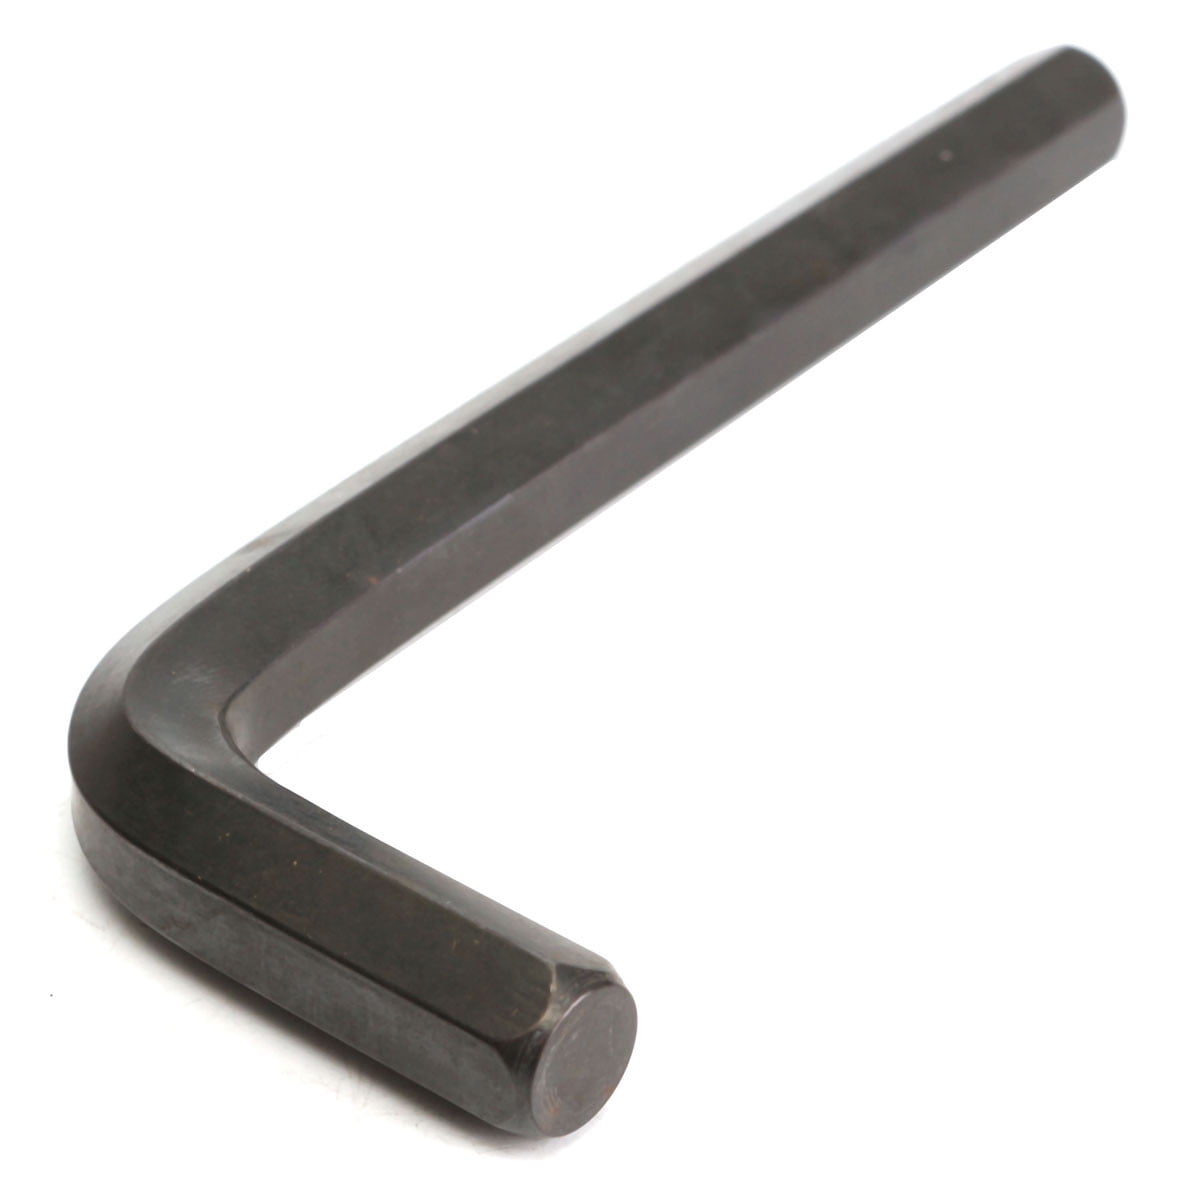 L-Shaped Hex Key Short Arm Allen Key Wrench Tool Metric 0.7mm-14mm Carbon Steel 